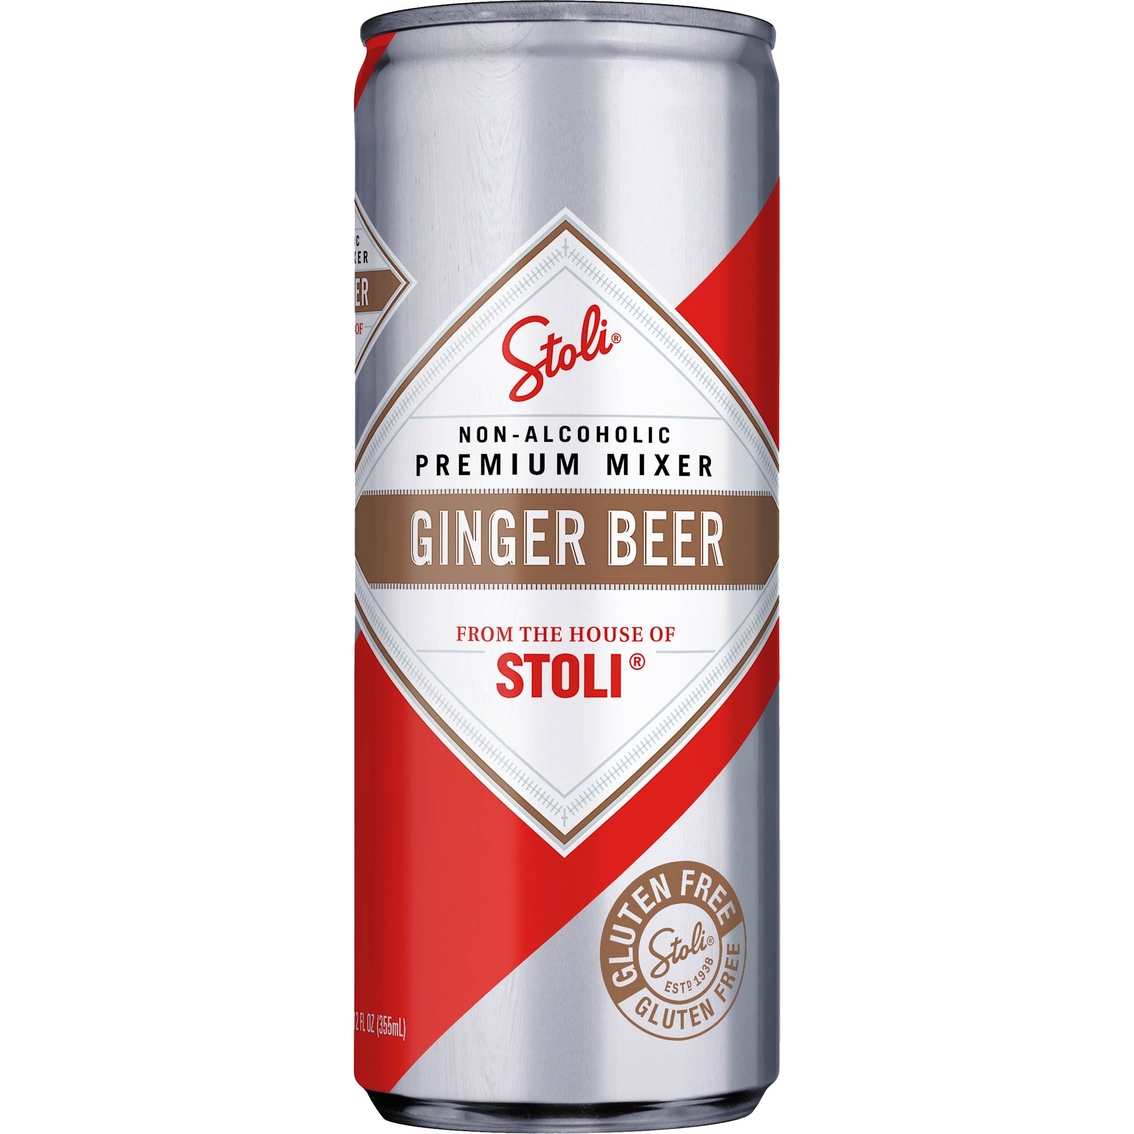 Stolichnaya Stoli Ginger Beer 12 oz. cans, 4 pk.